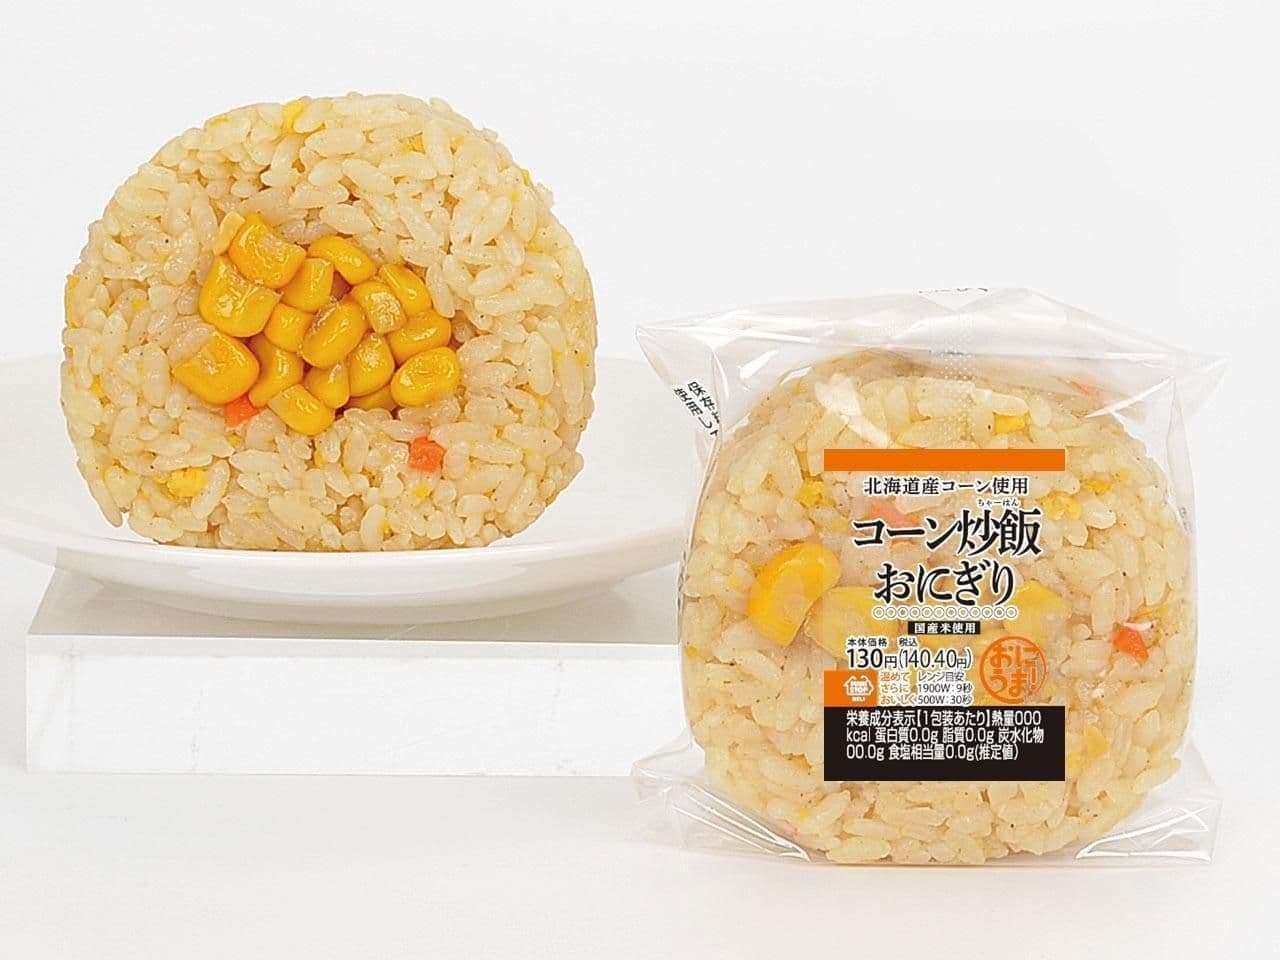 Ministop "Hokkaido Corn Fried Rice Balls".